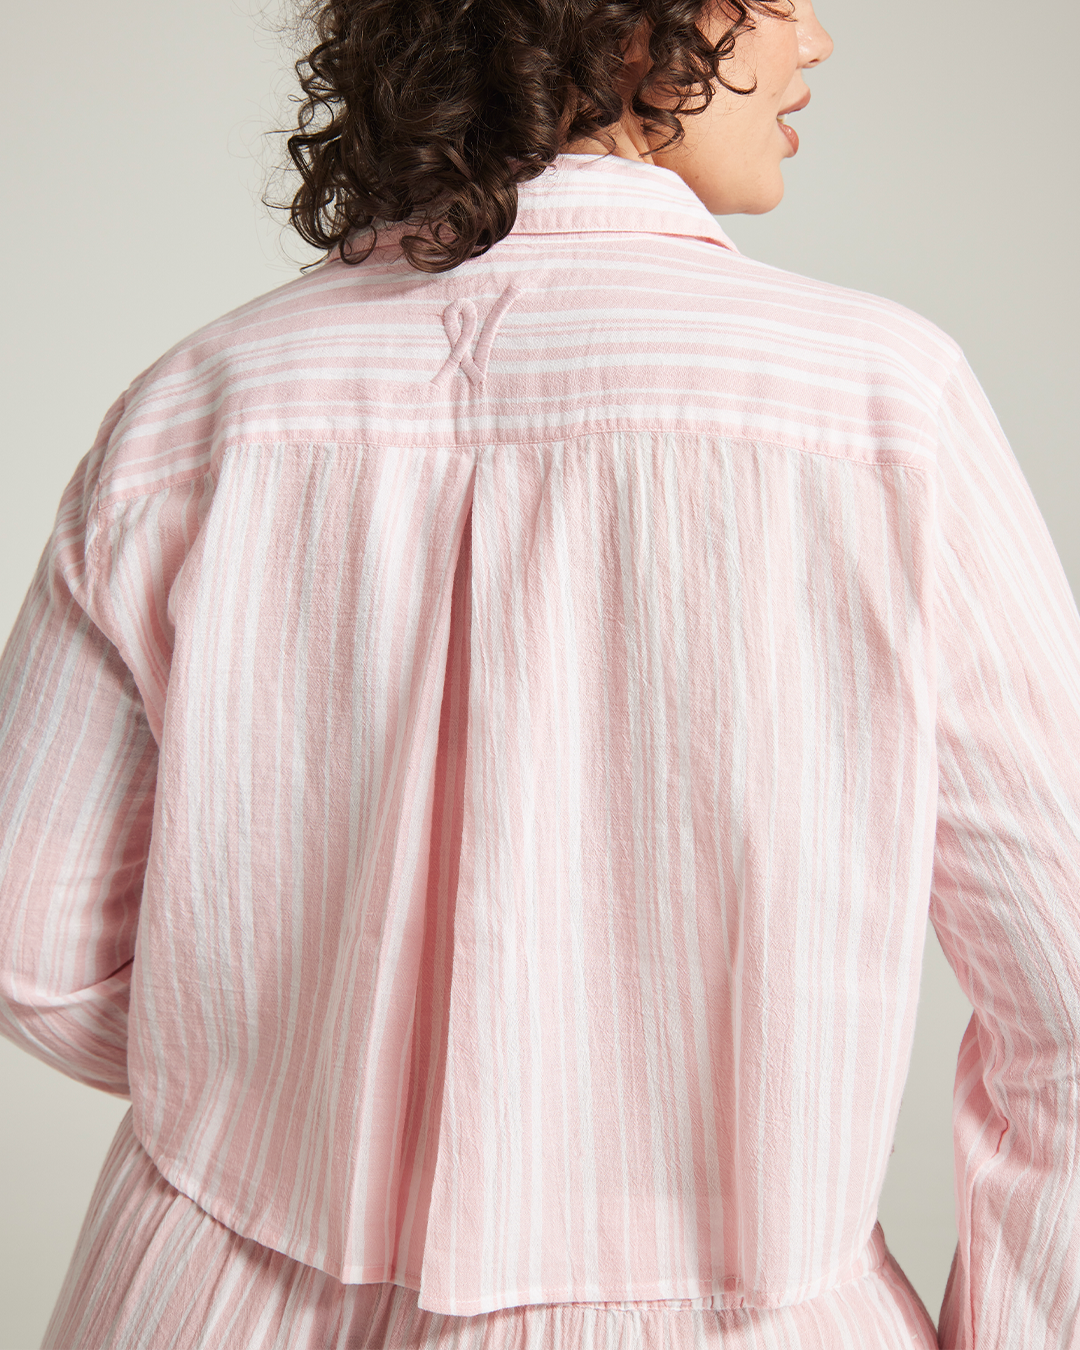 The Cropped Shirt - Fondant Pink Stripe